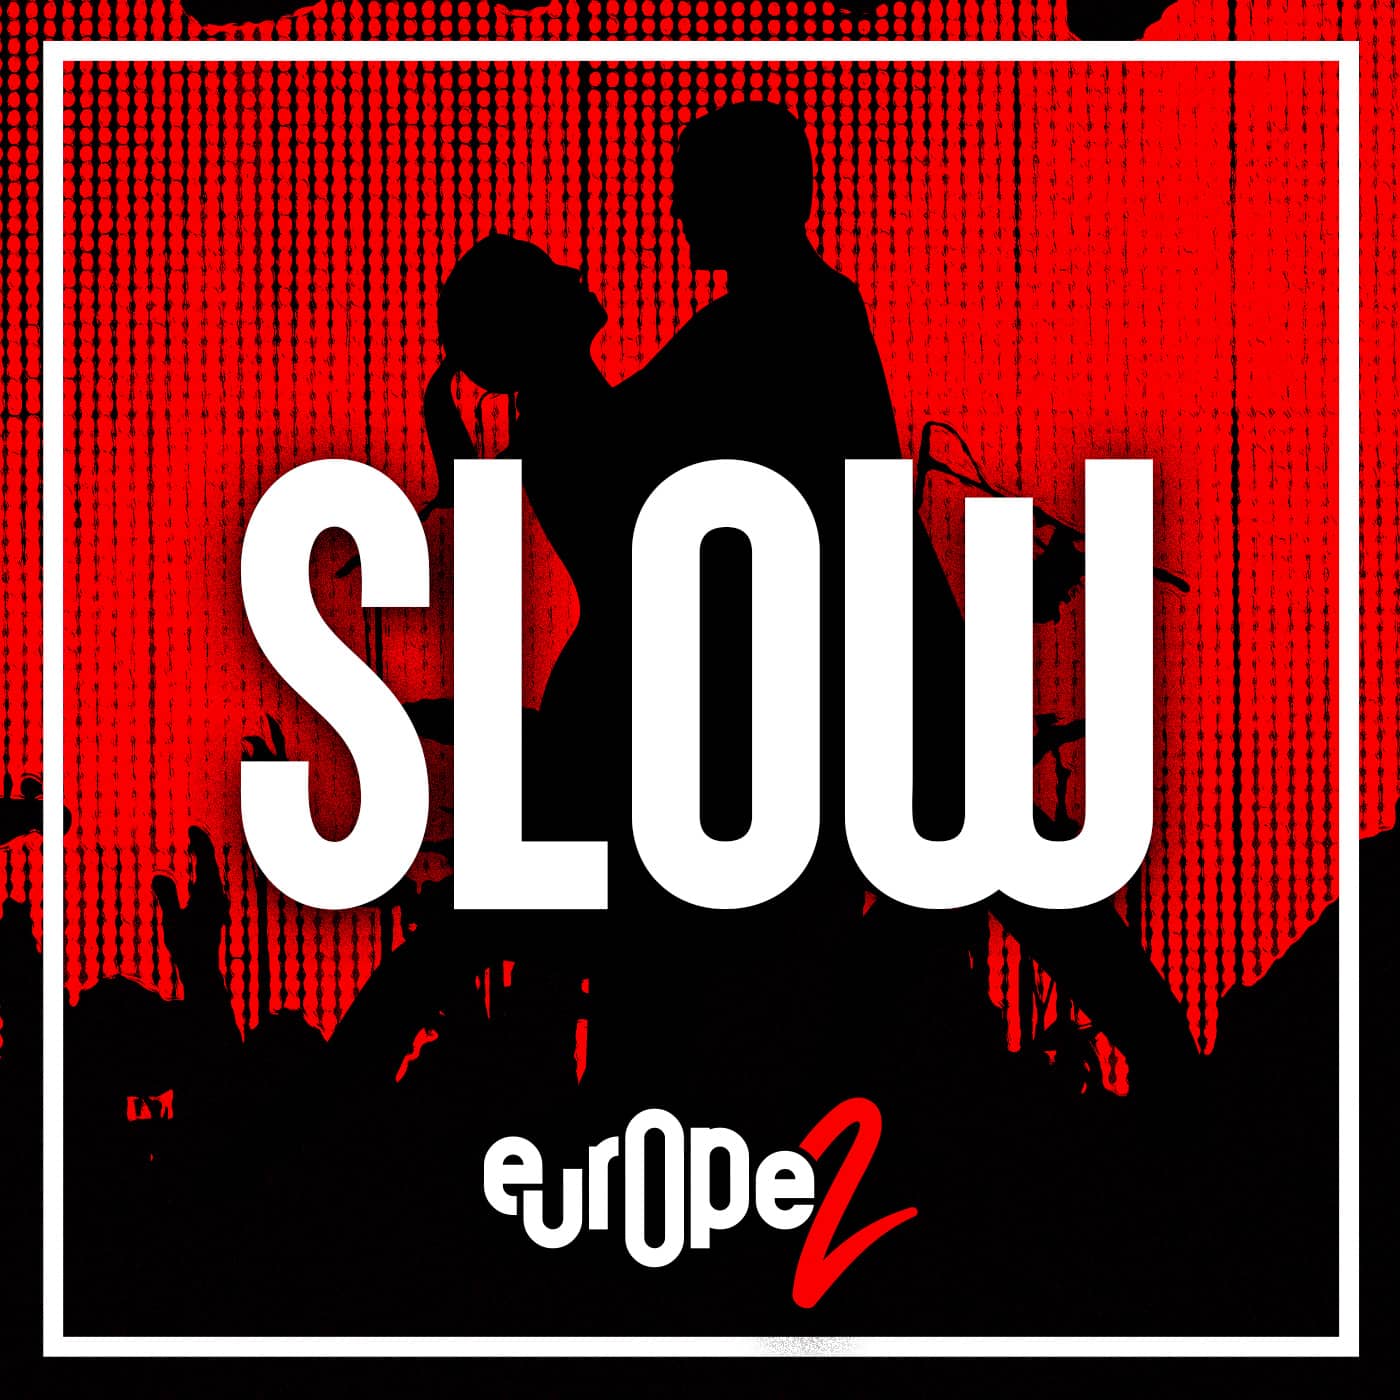 Europe 2 Slow